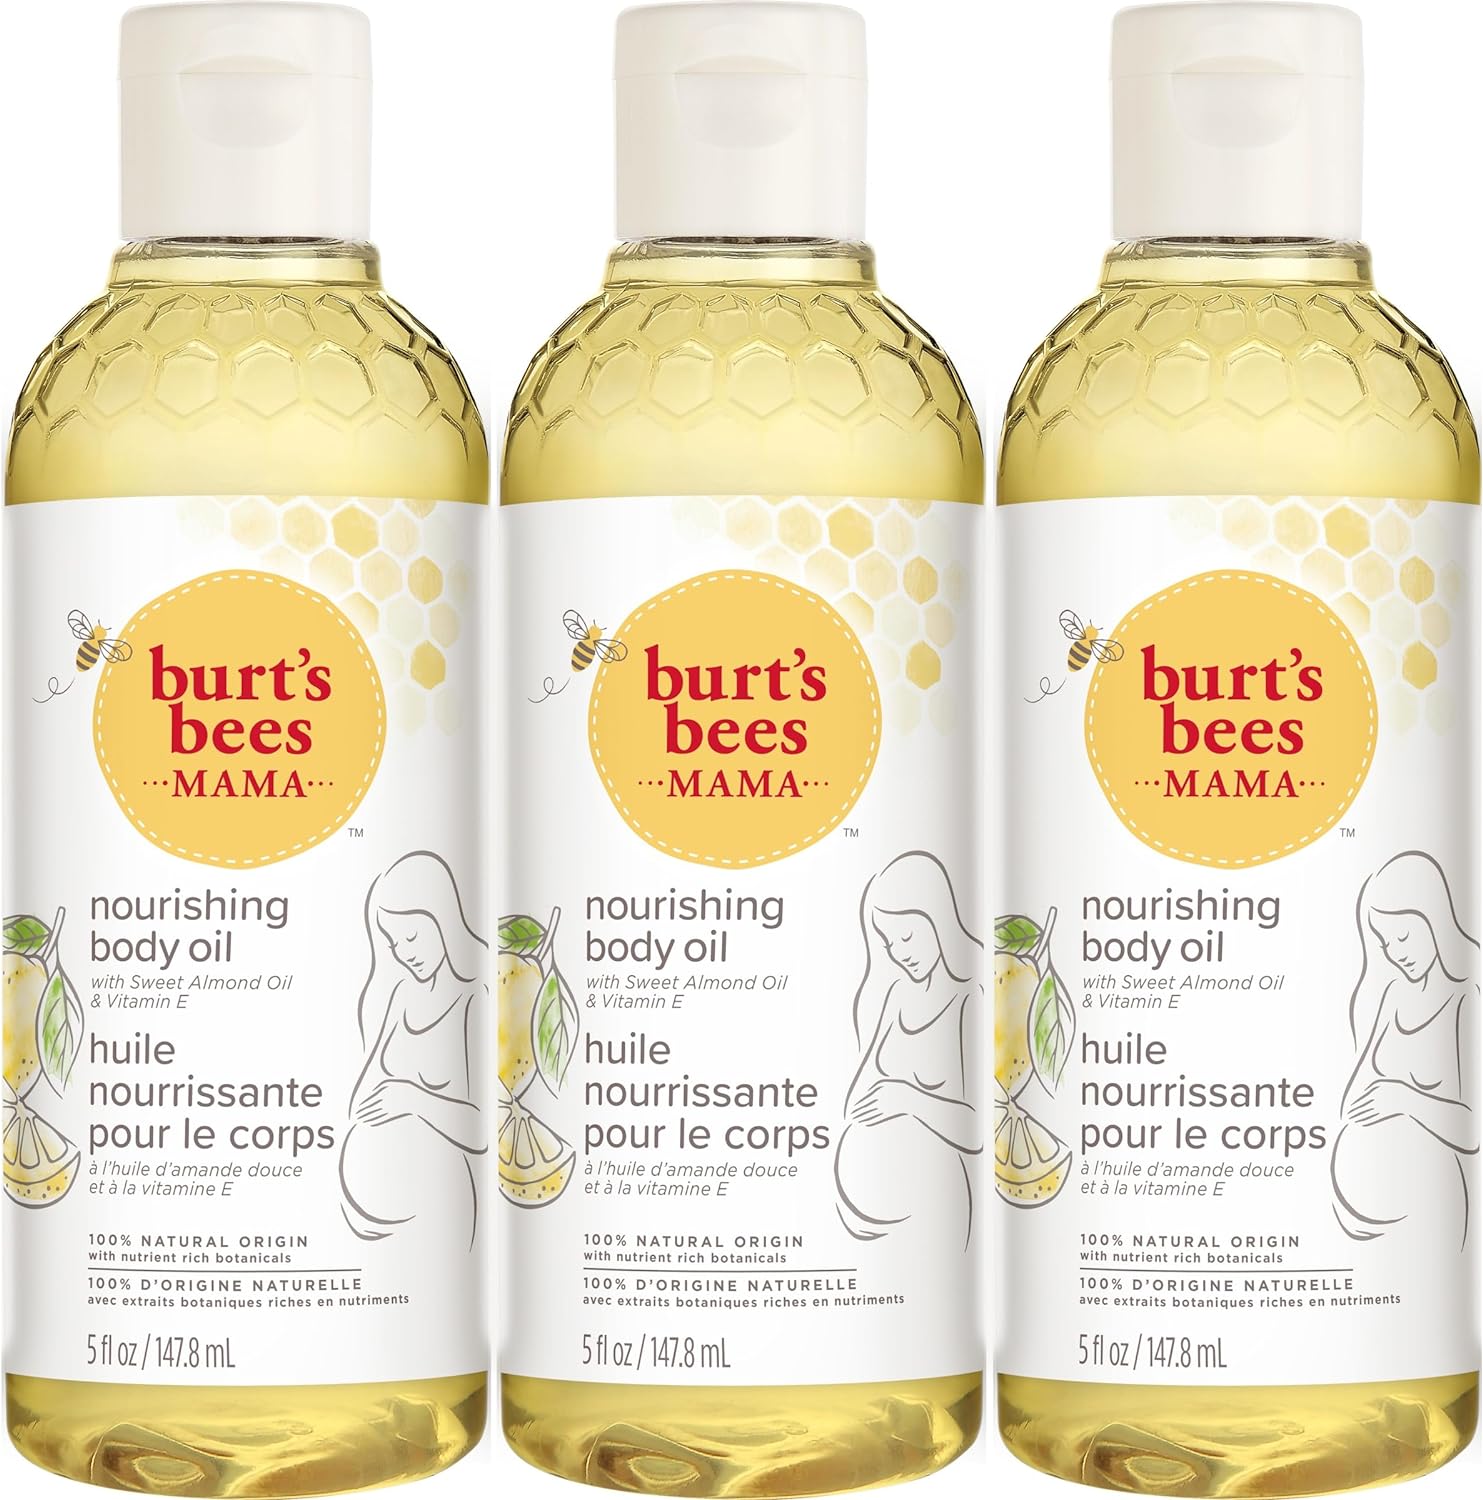 Burts Bees Mama Body Oil with Vitamin E, 100% Natural Origin, 5 Fluid Ounces